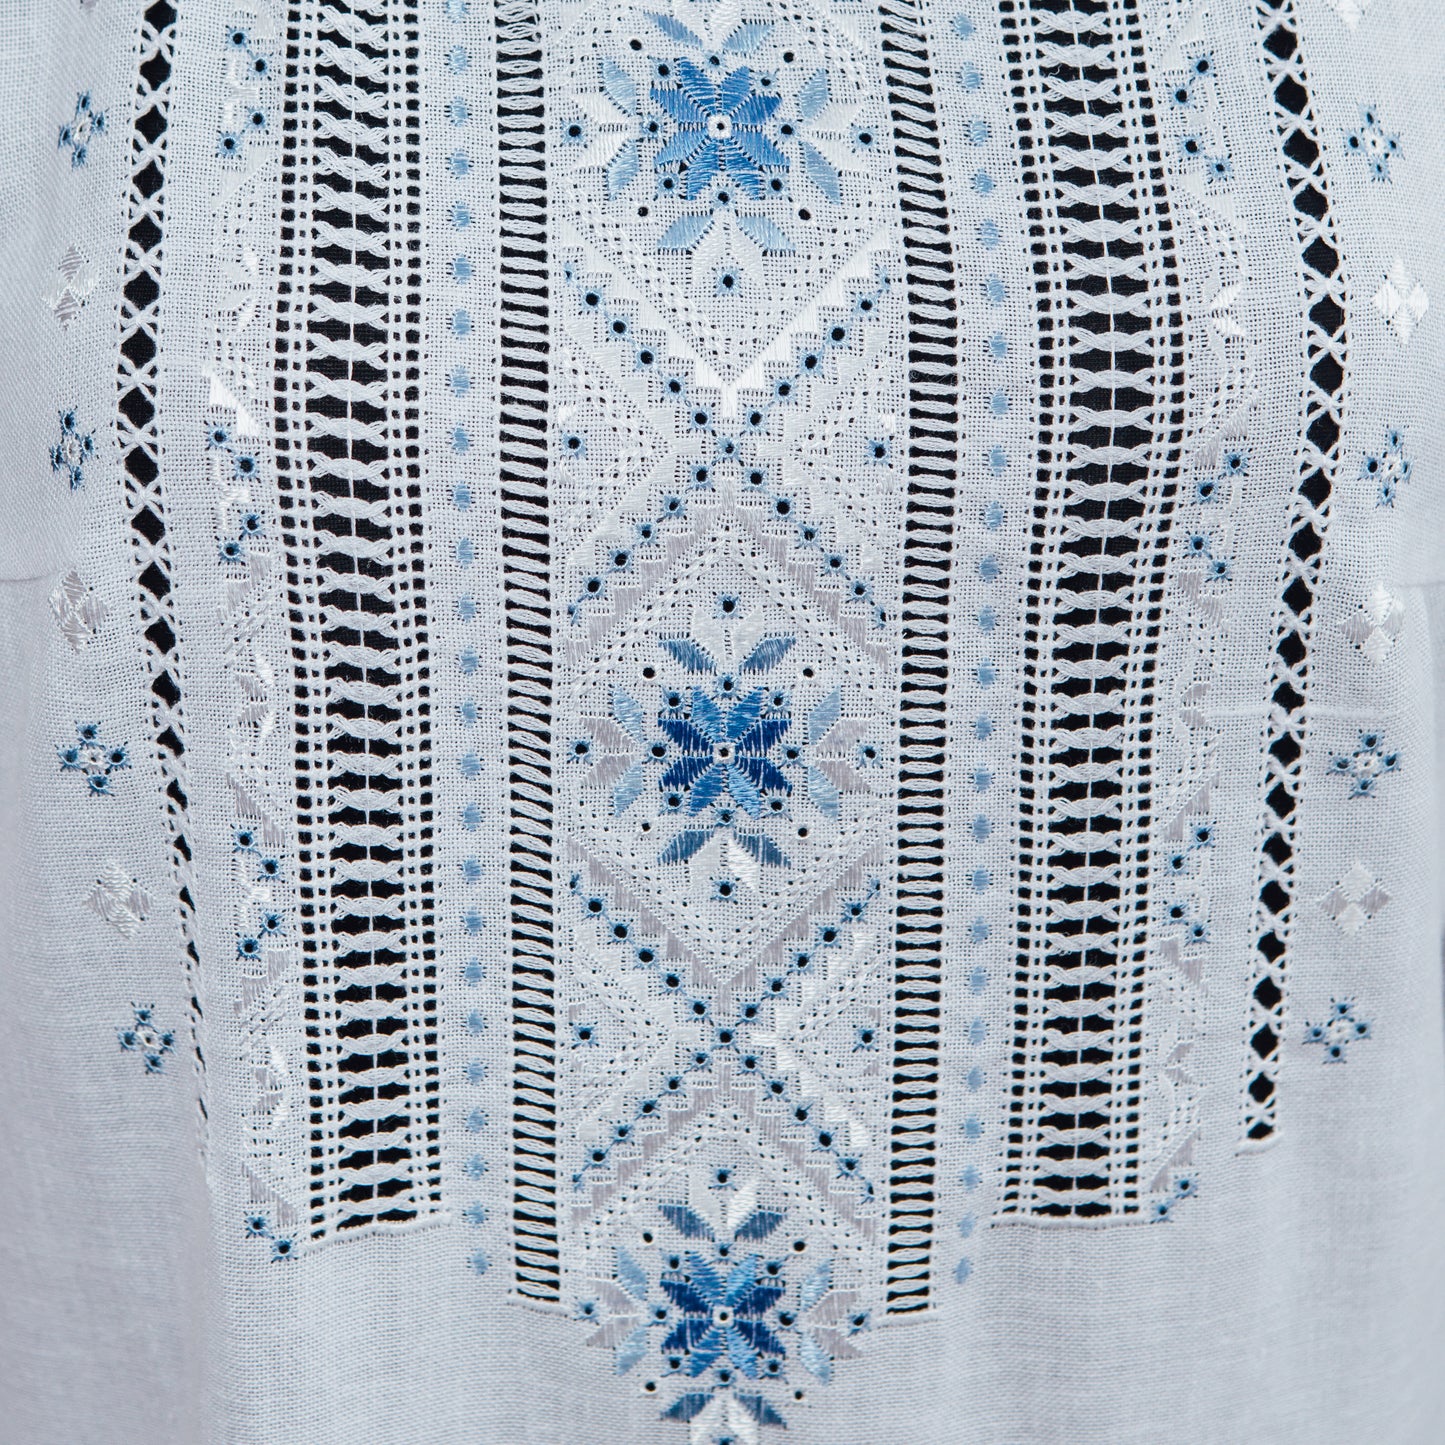 Ukraine, Pokuttya Folk Art / Lesia Pona, Embroidery